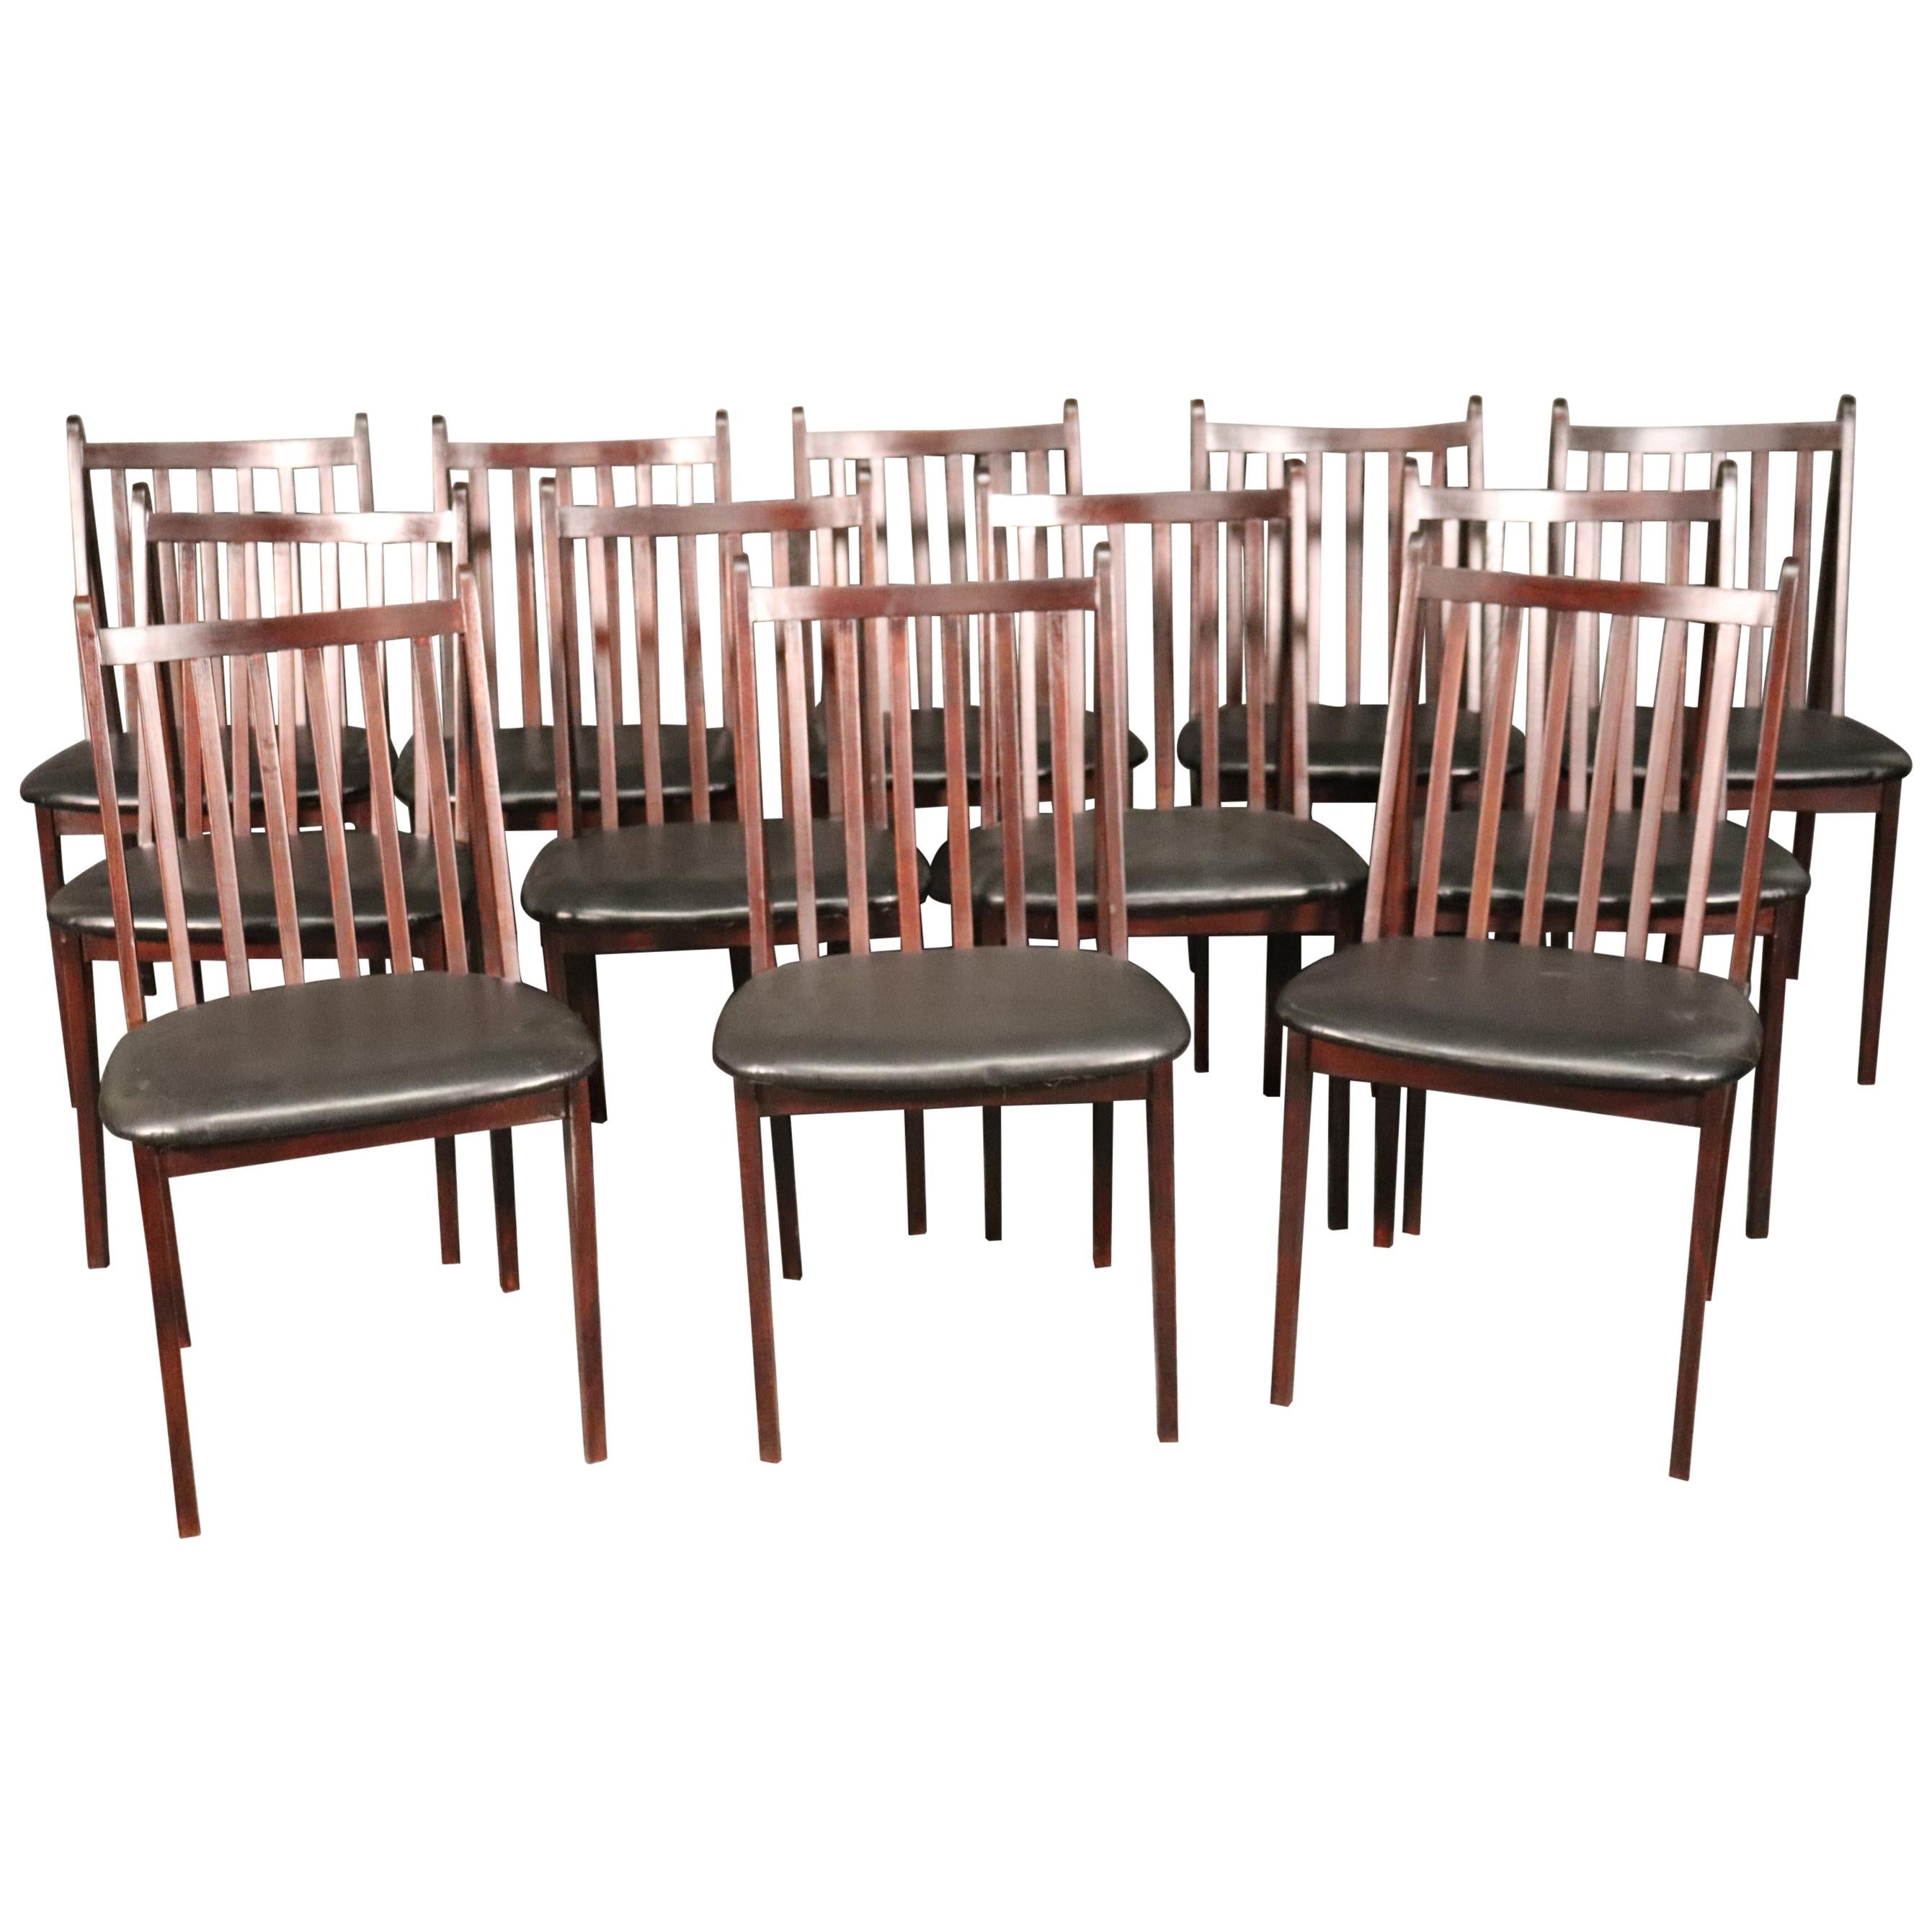 Large Set of 12 Mahogany Mid-Century Modern Dining Chairs, circa 1960